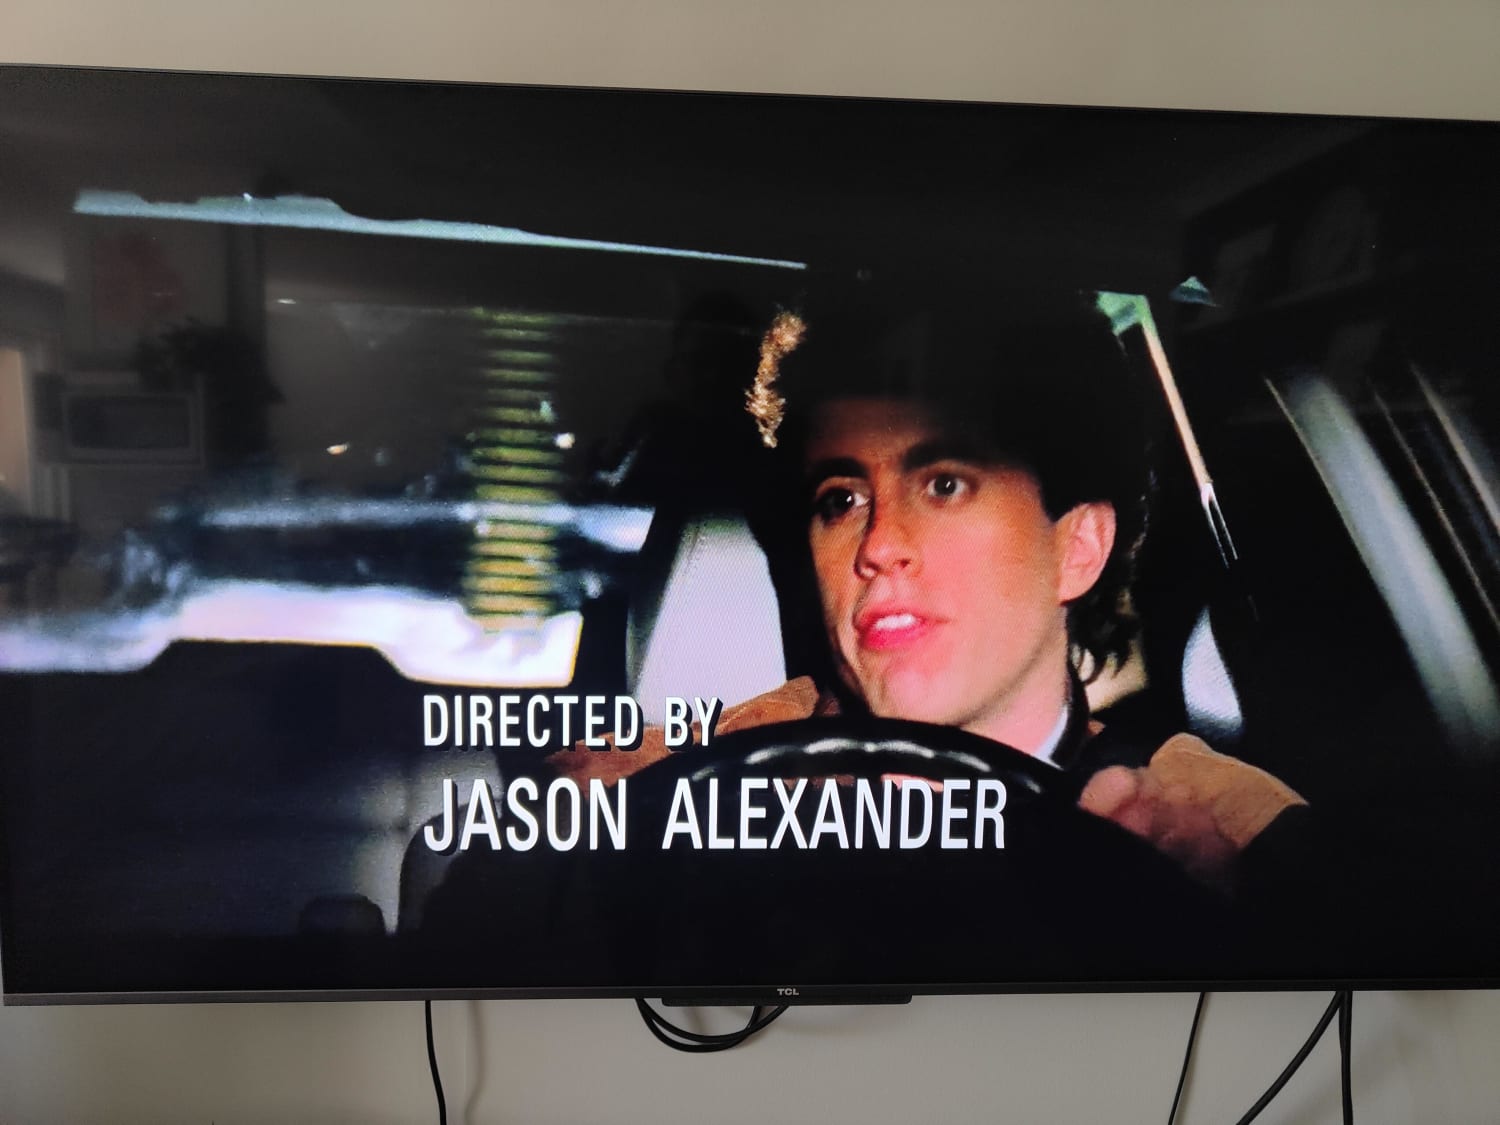 just realised that Jason Alexander directed The Good Samaritan episode.